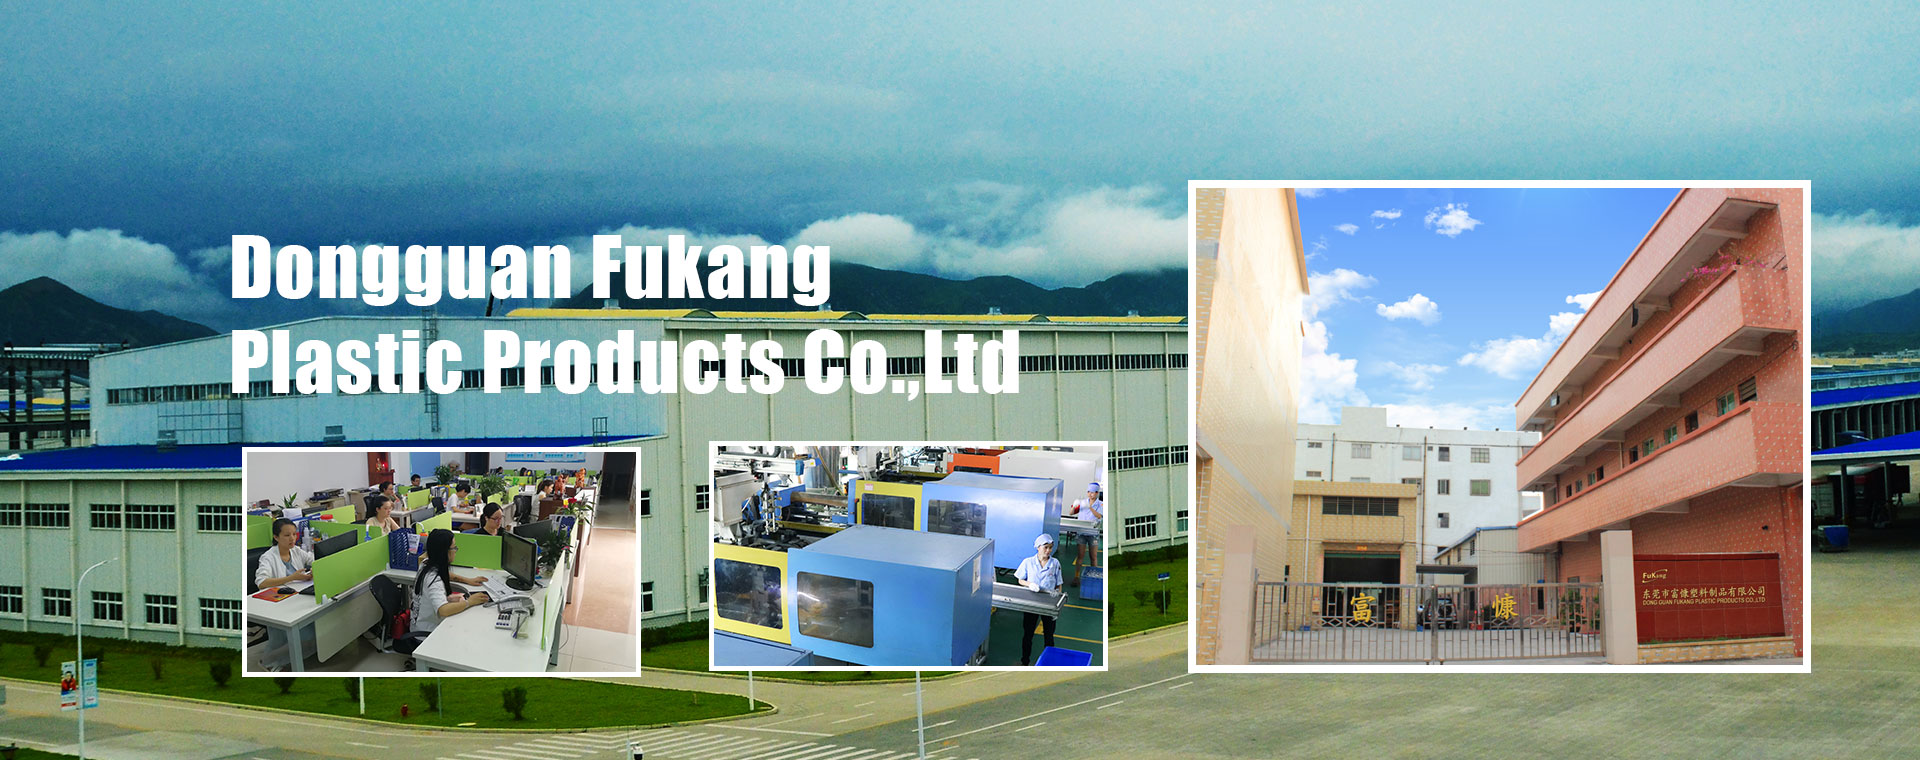 Dongguan Fukang Plastic Products Co.,Ltd